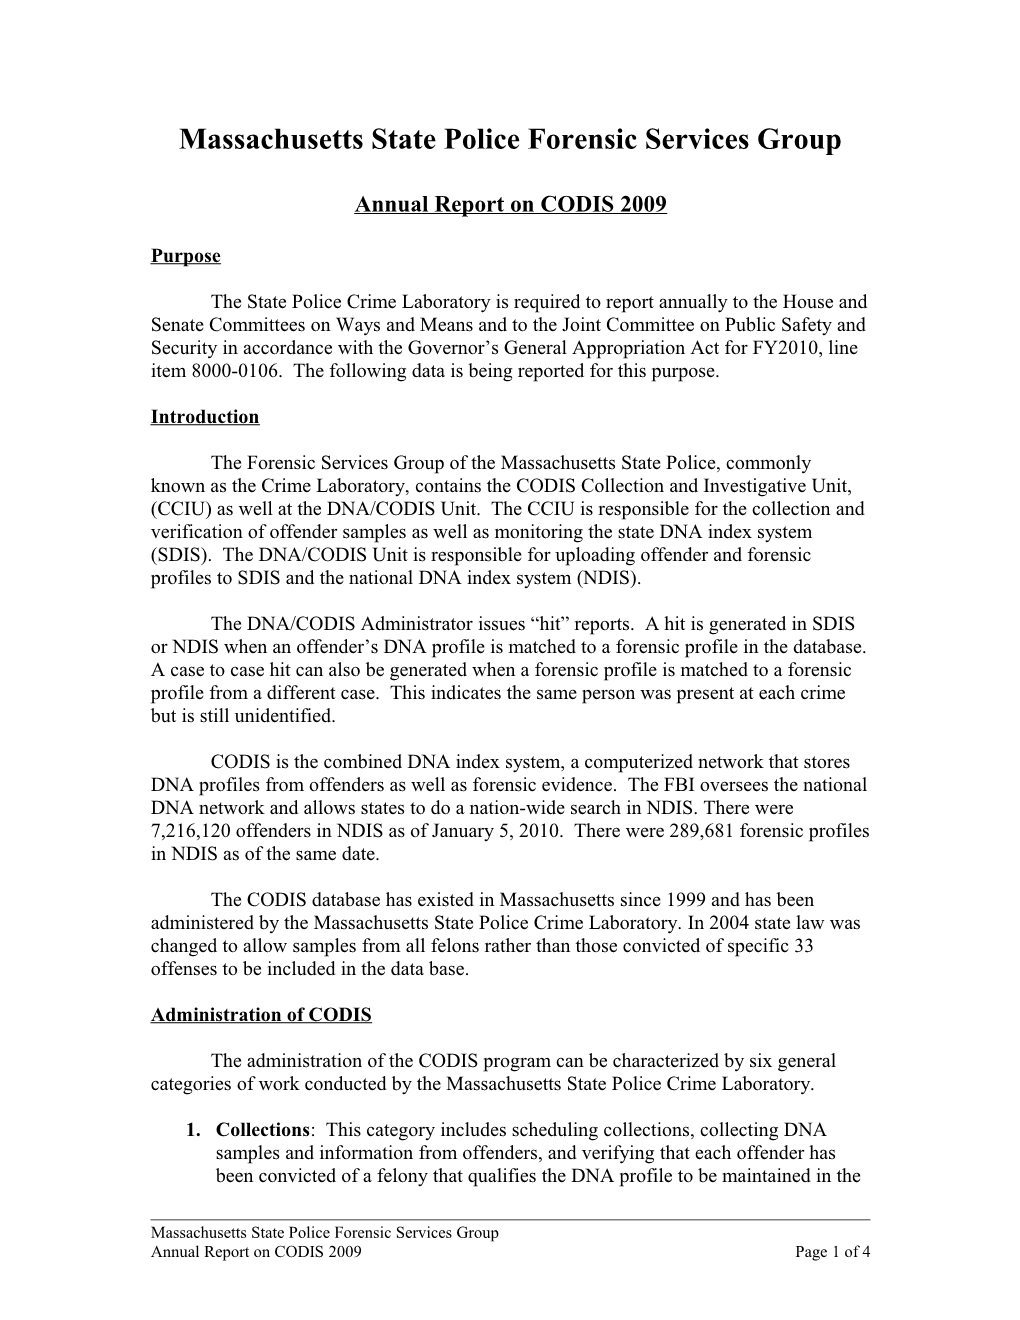 Annual Report on CODIS 2009